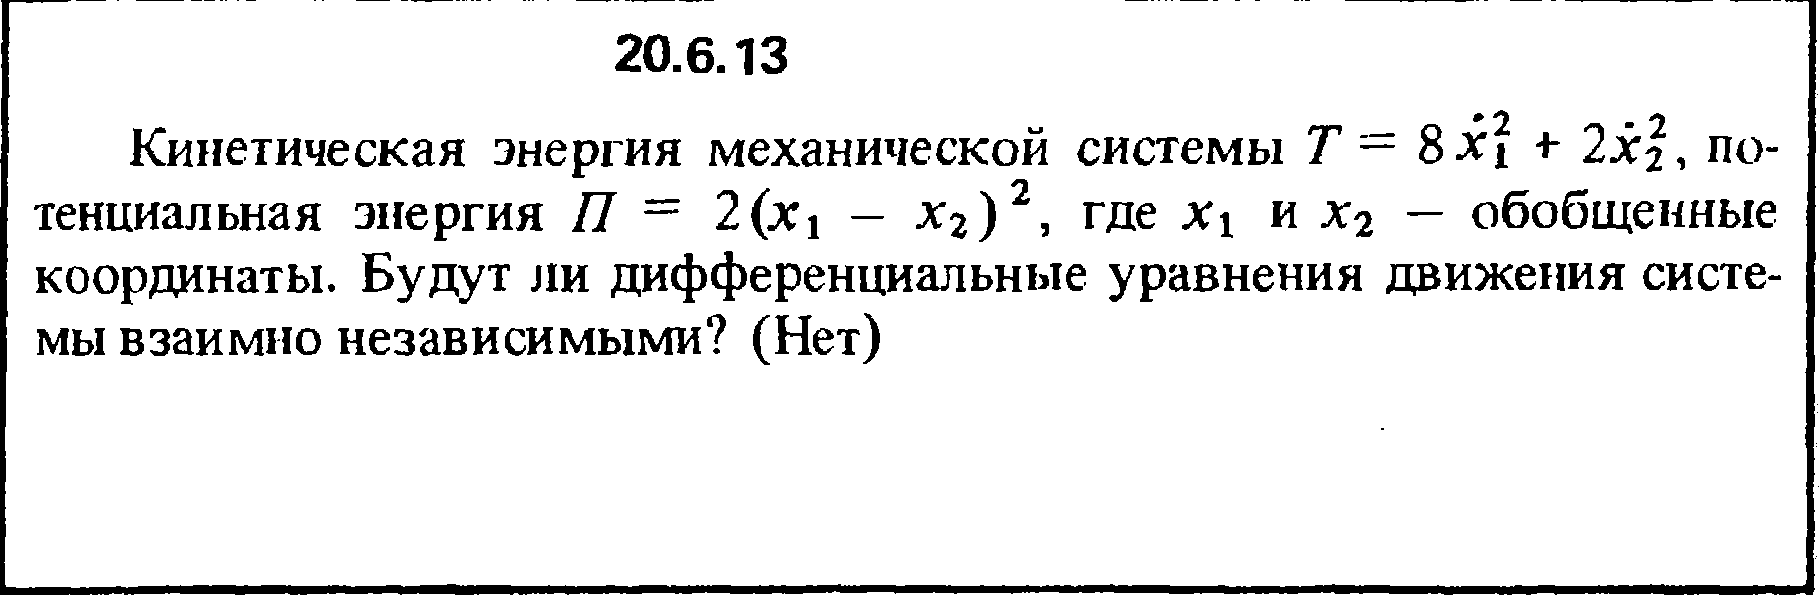 Решение 20.6.13 из сборника (решебника) Кепе О.Е. 1989